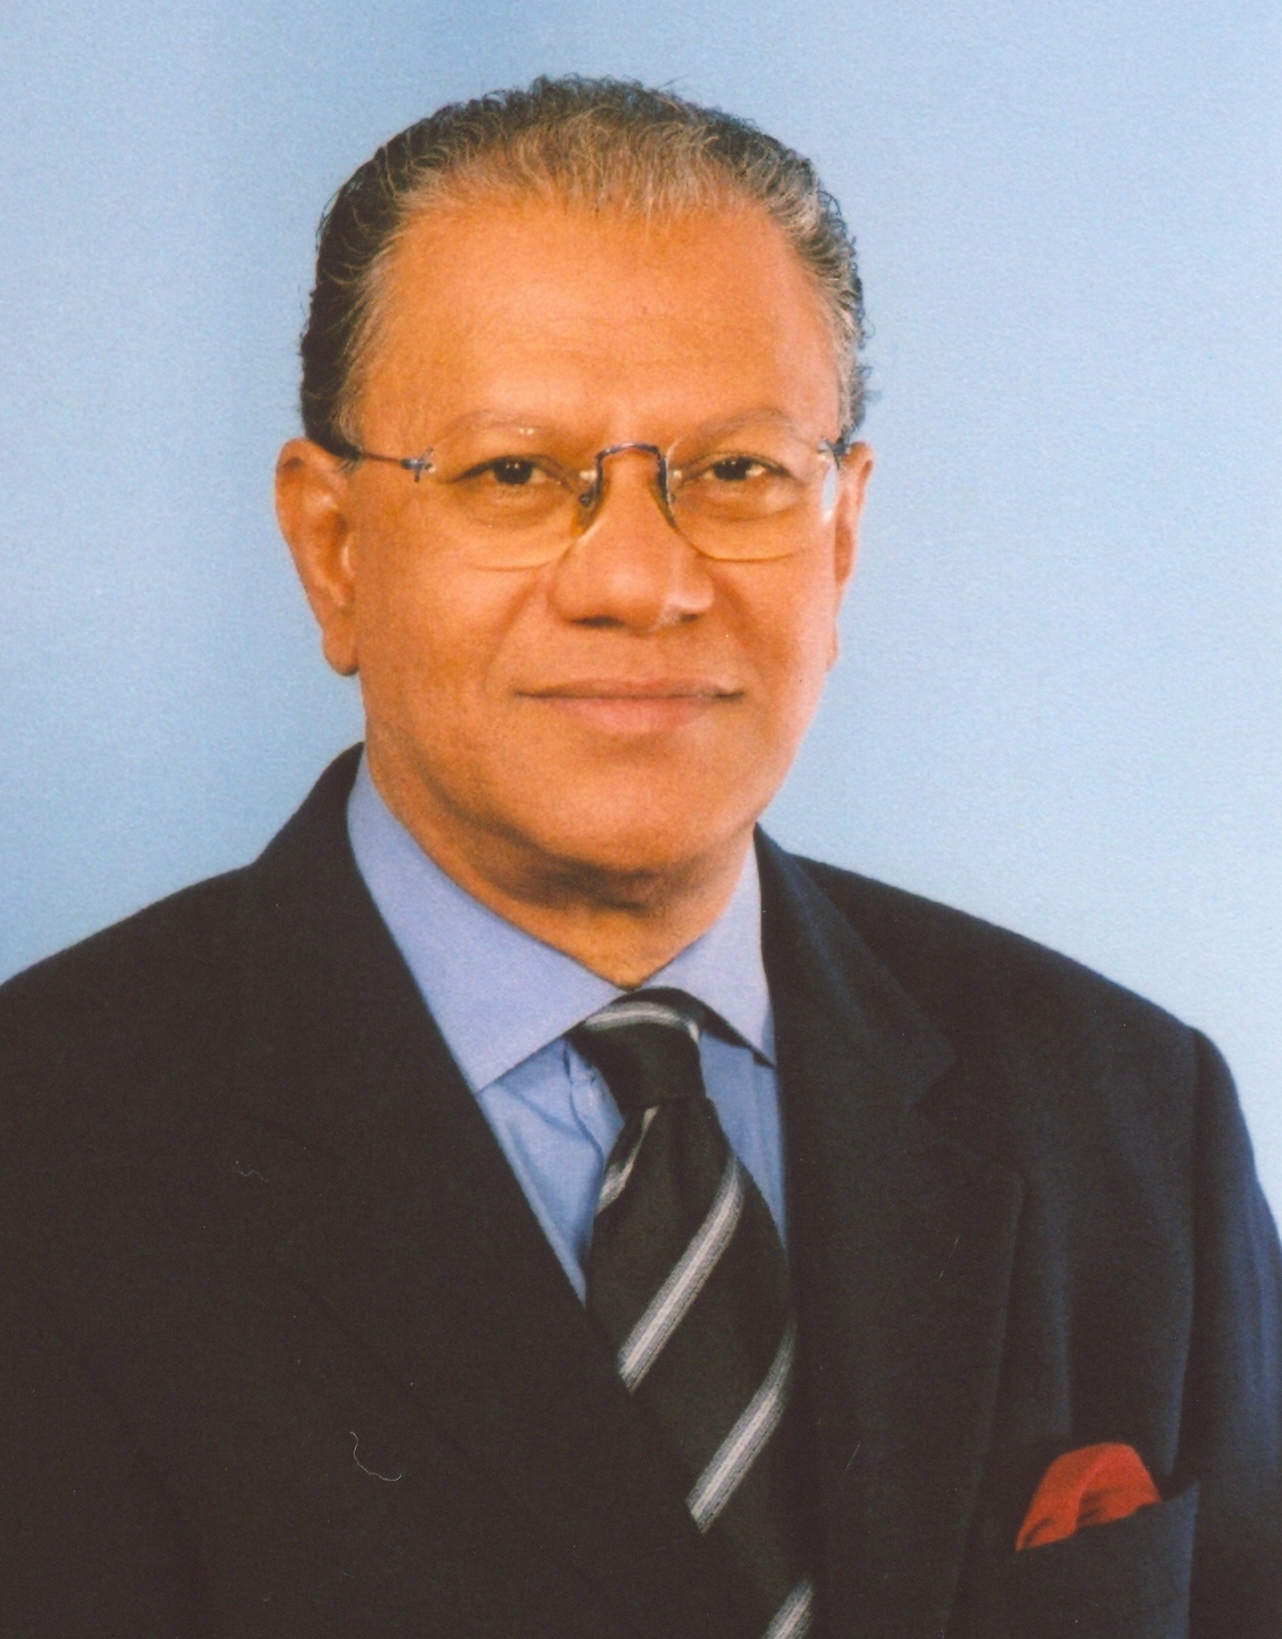 Mauritius Prime Minister Dr. Navinchandra Ramgoolam